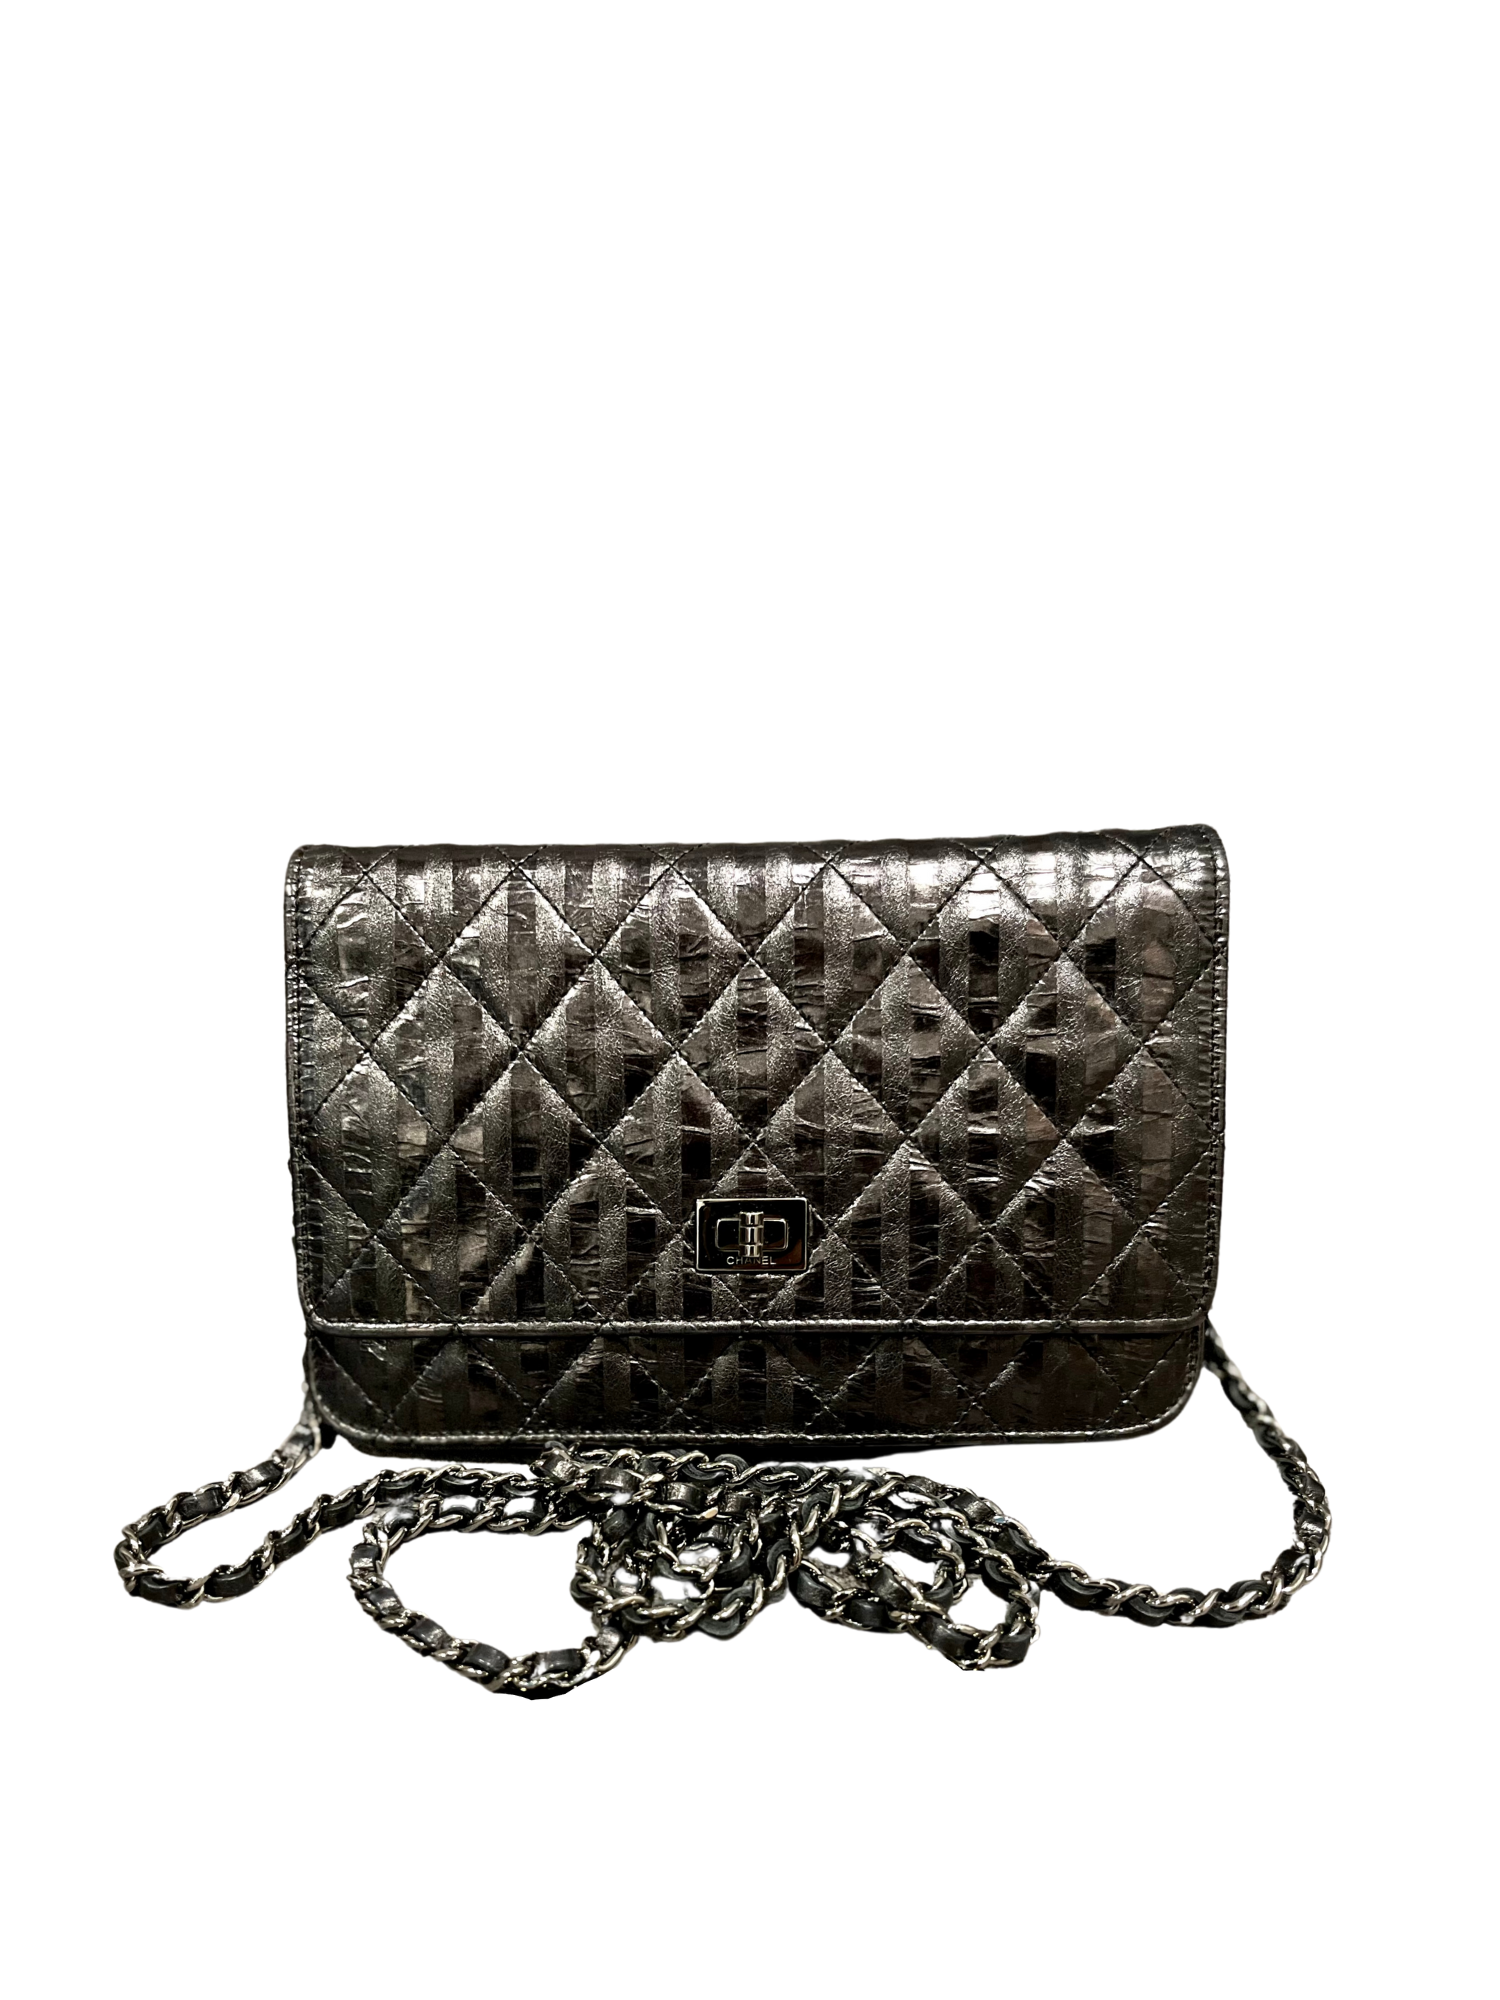 buy chanel handbags online